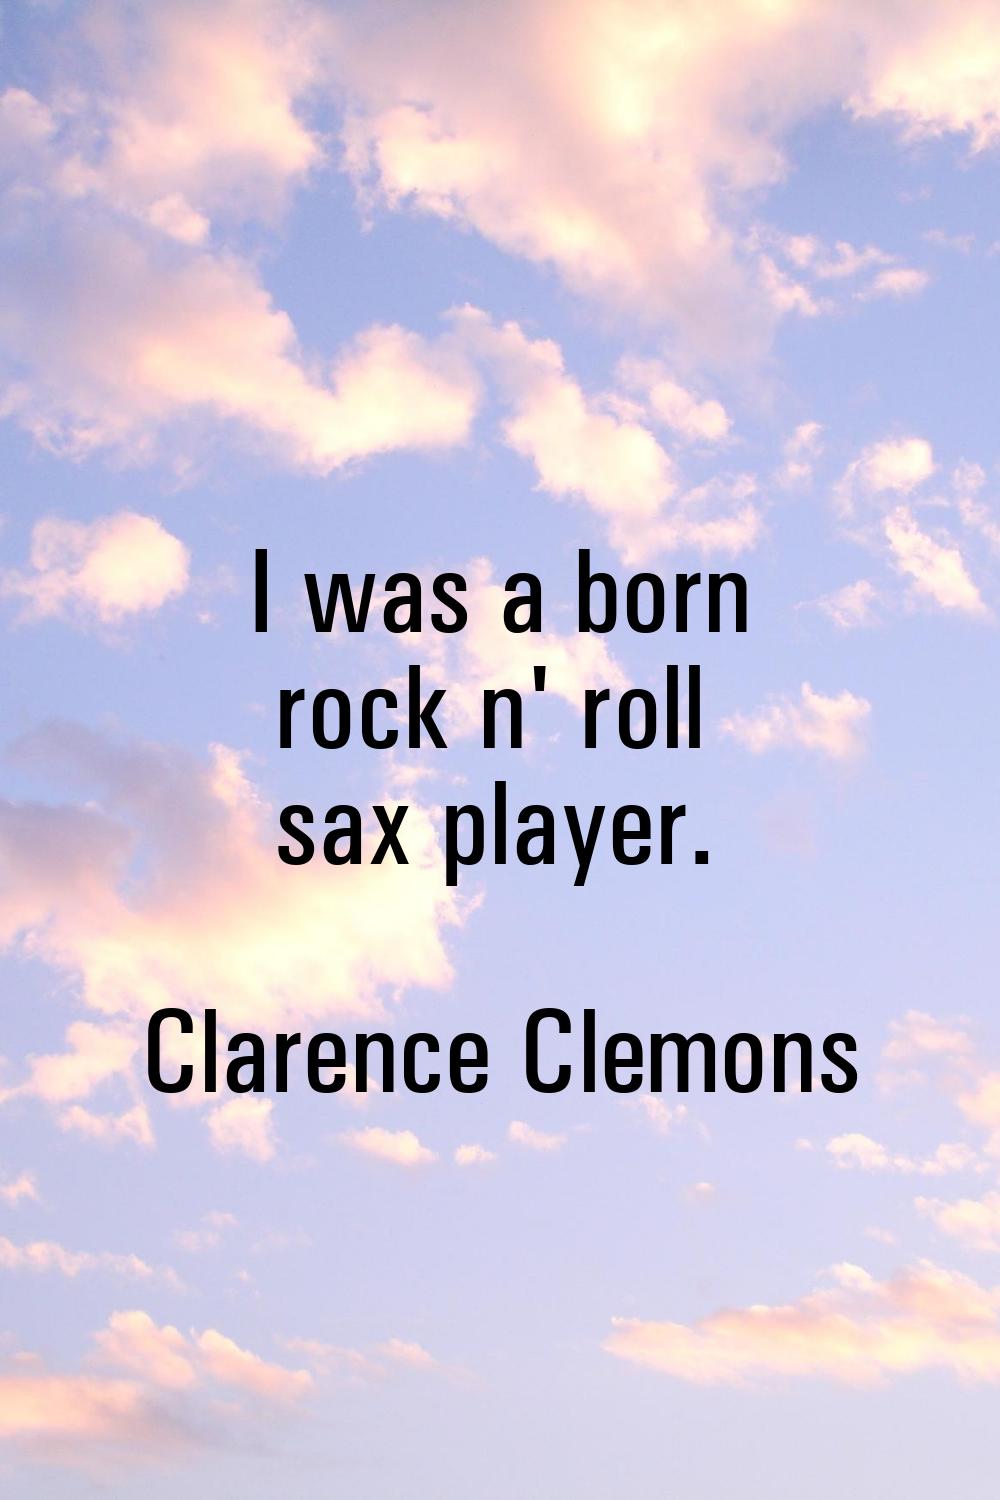 I was a born rock n' roll sax player.